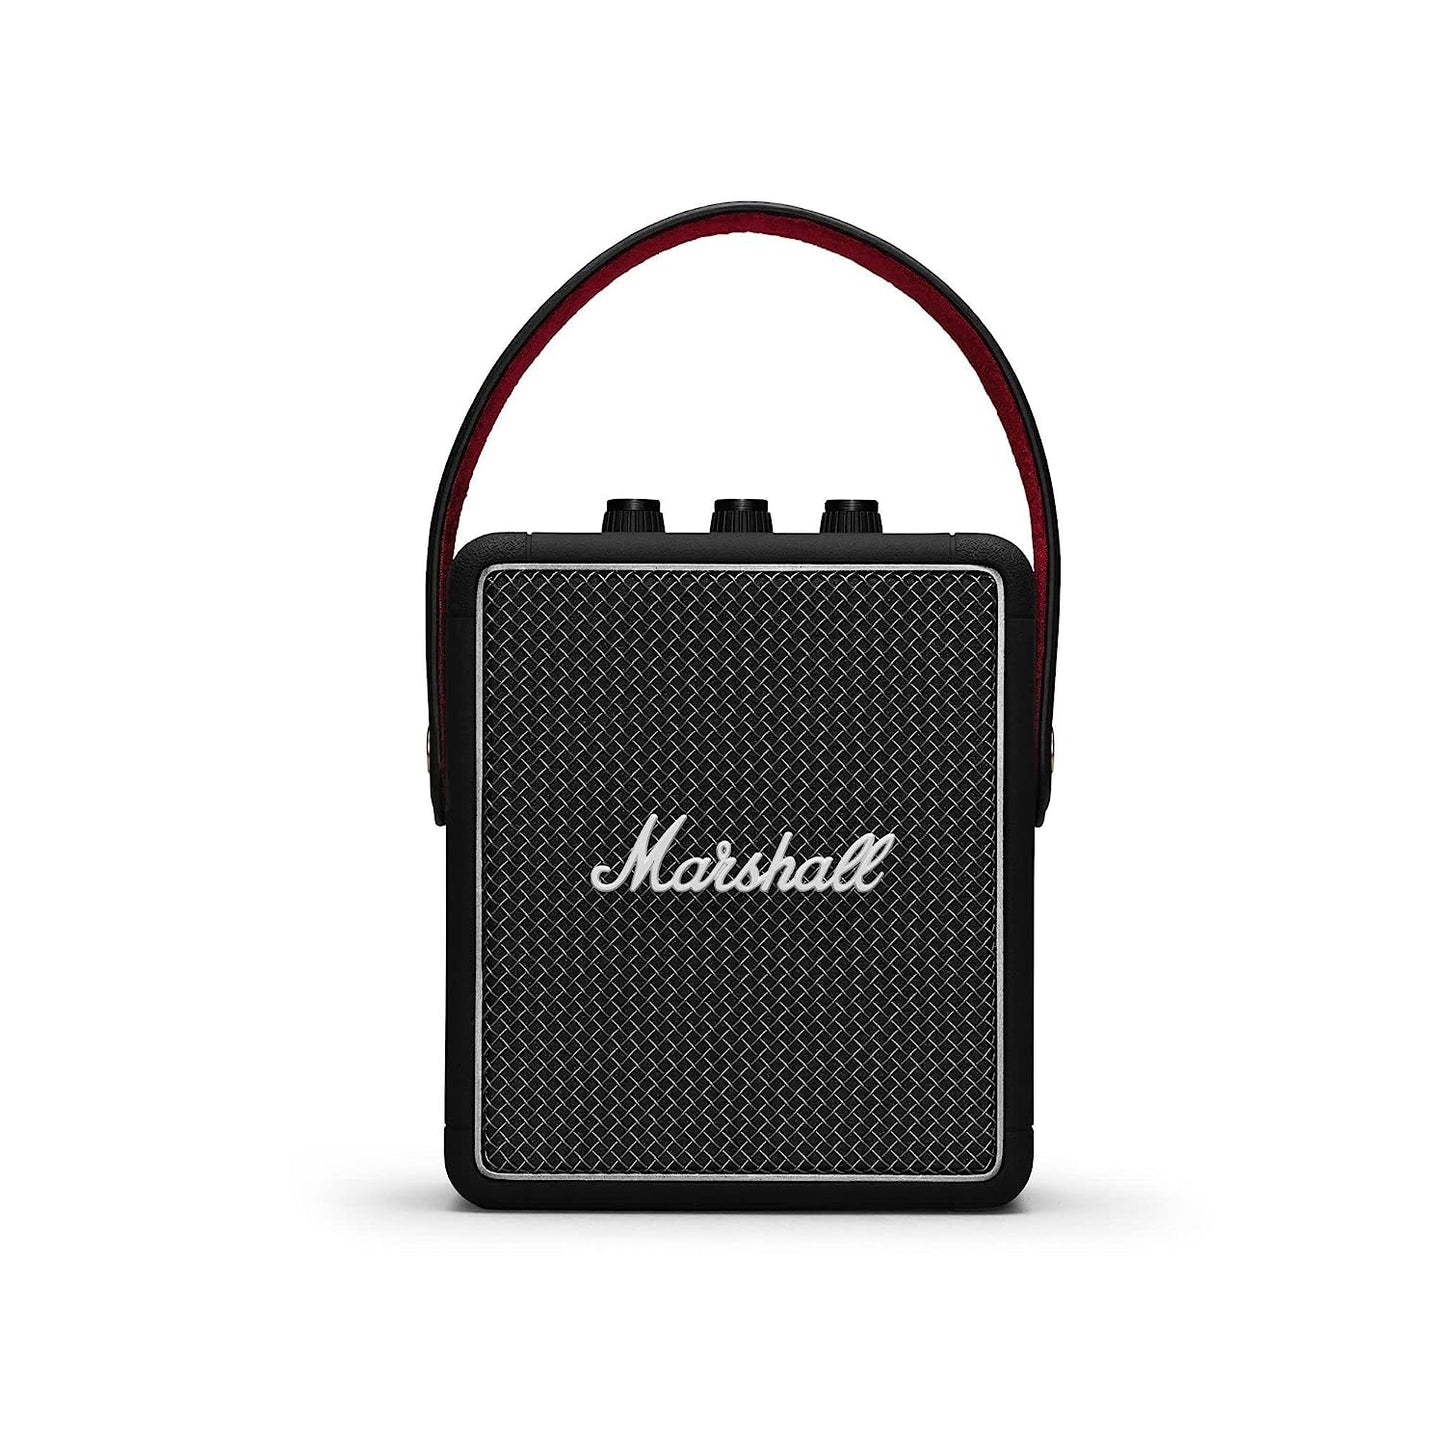 Marshall Stockwell ll Bluetooth Speaker (Black/Burgundy) - Black